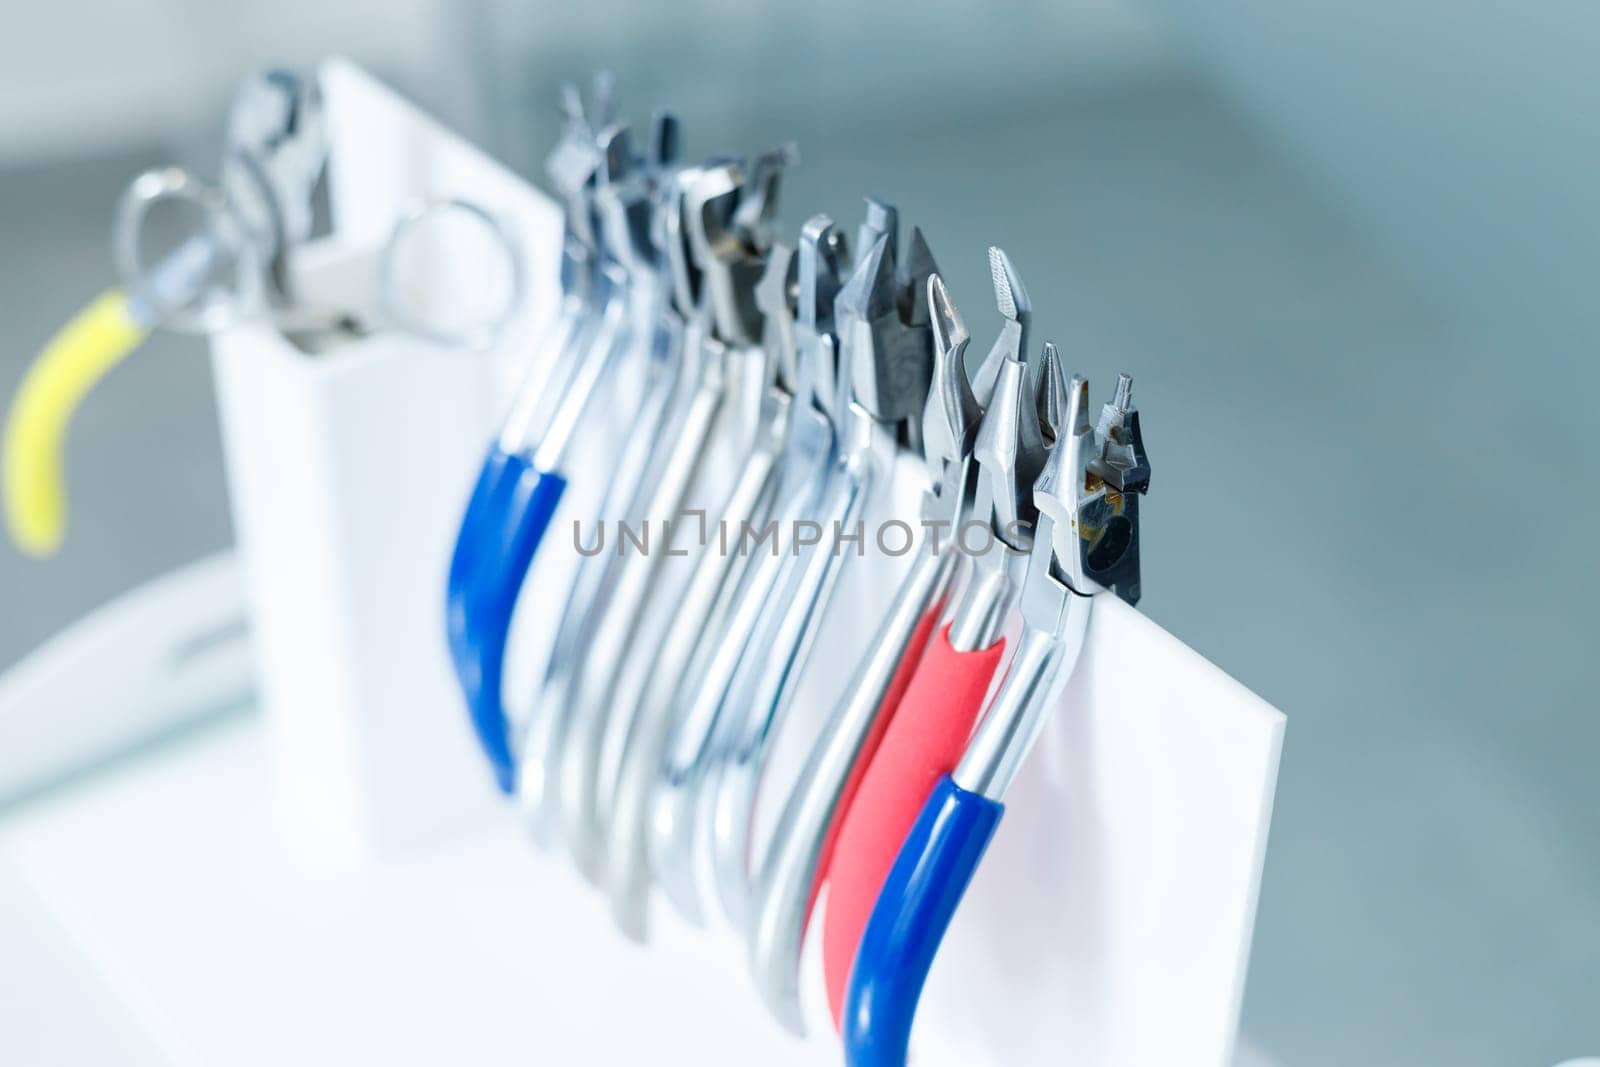 Orthodontic metal forceps for dental treatment. Orthodontic instruments by Dmitrytph